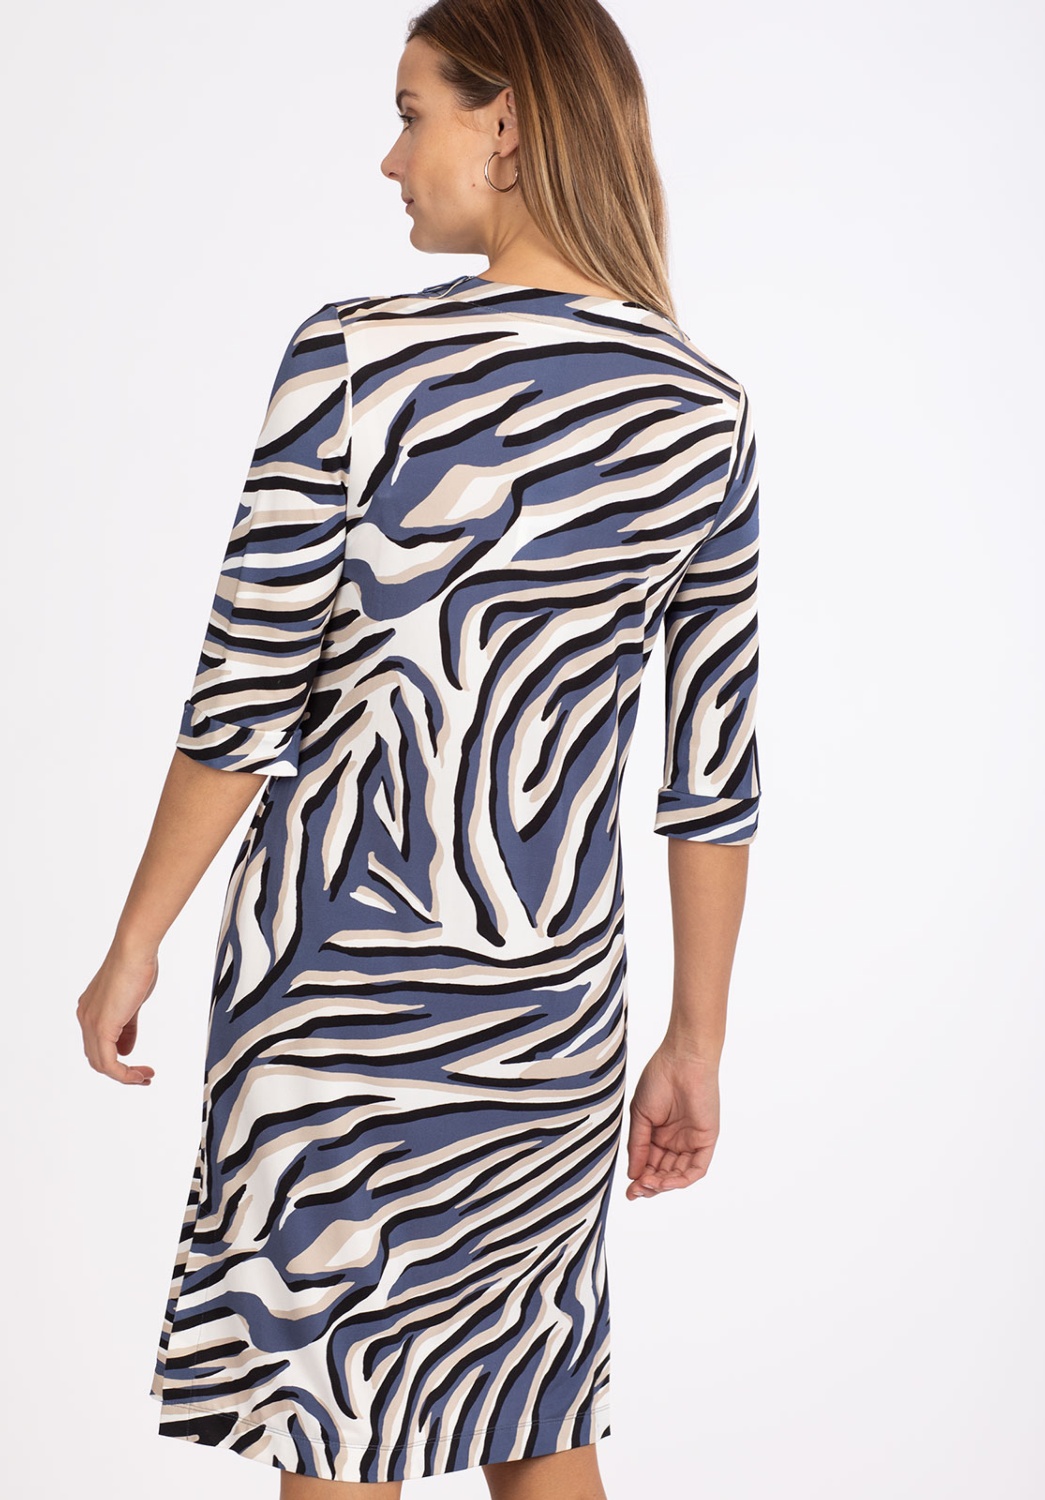 Fringed Zebra Dress 2